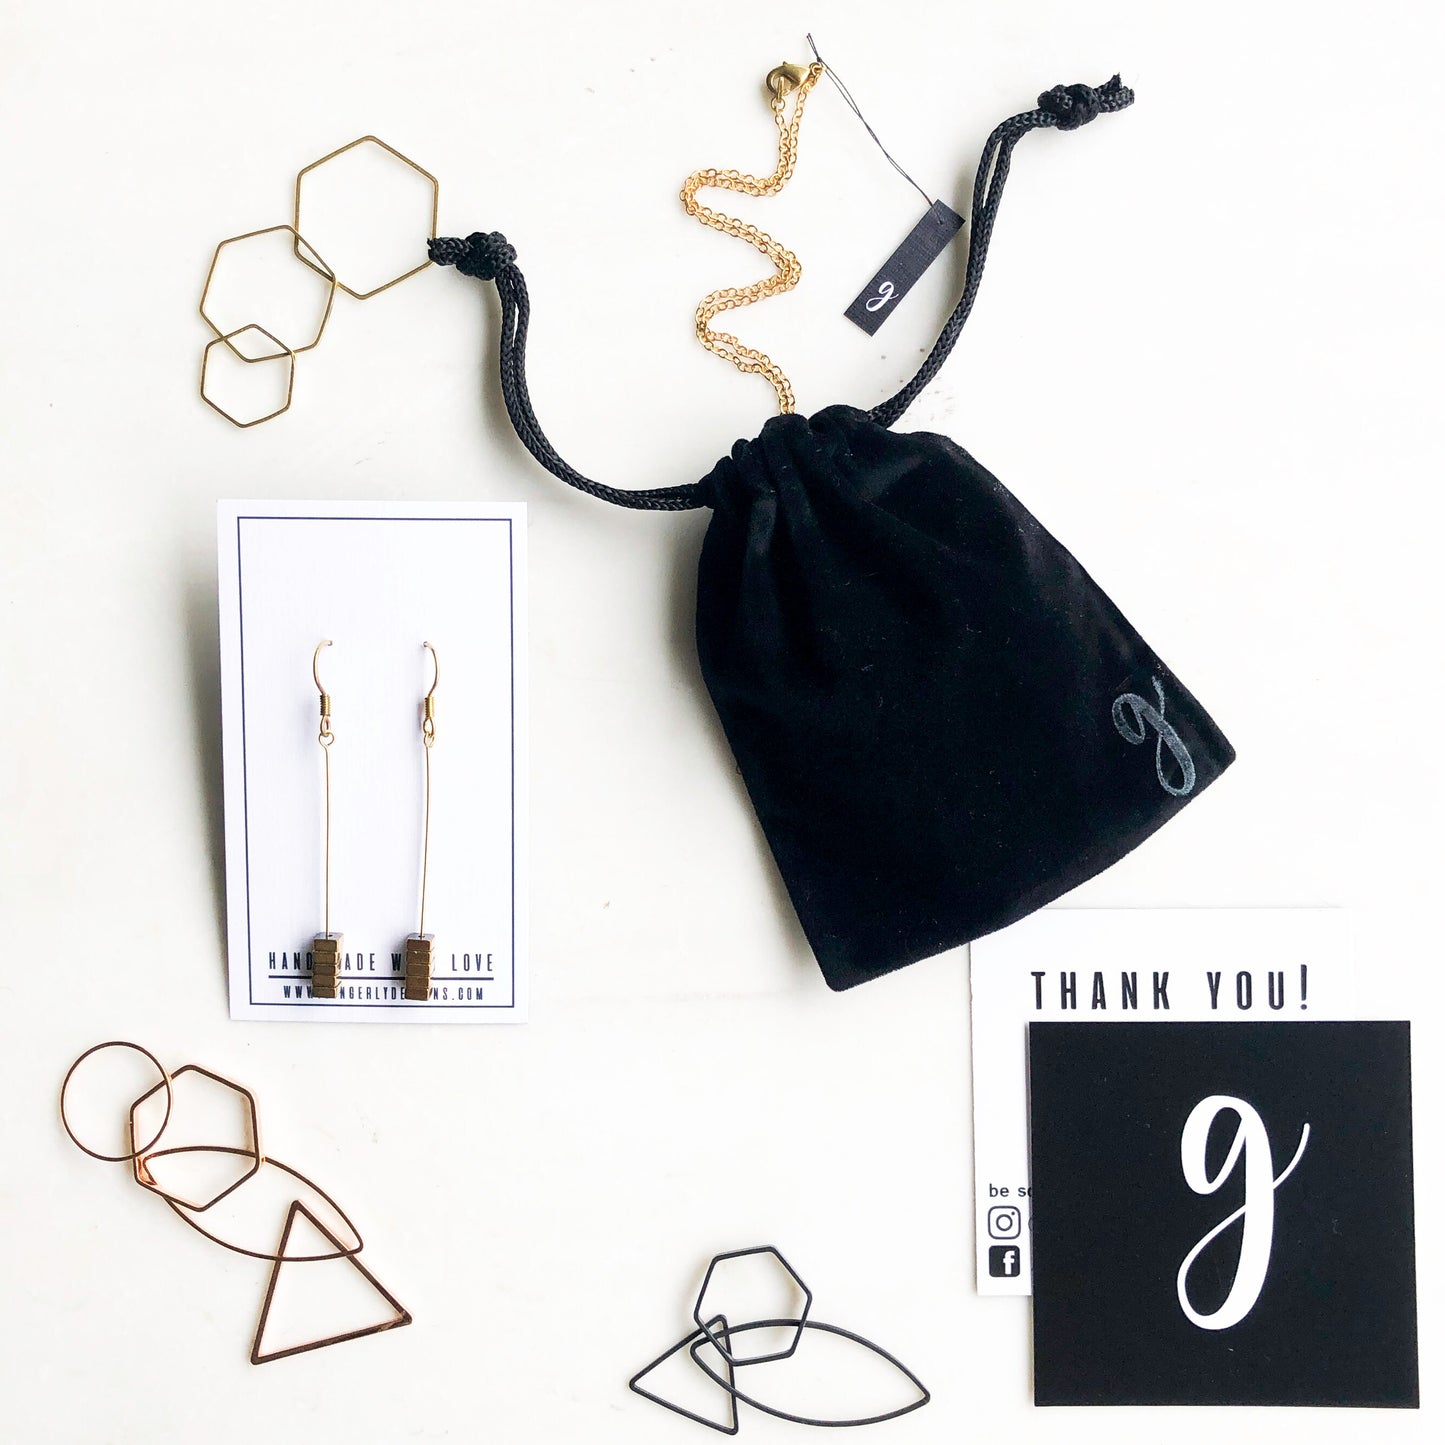 Leaf earrings, gold and black chain earrings, dangle earrings, elegant earrings, bridesmaid earrings, minimalist statement jewelry, gift